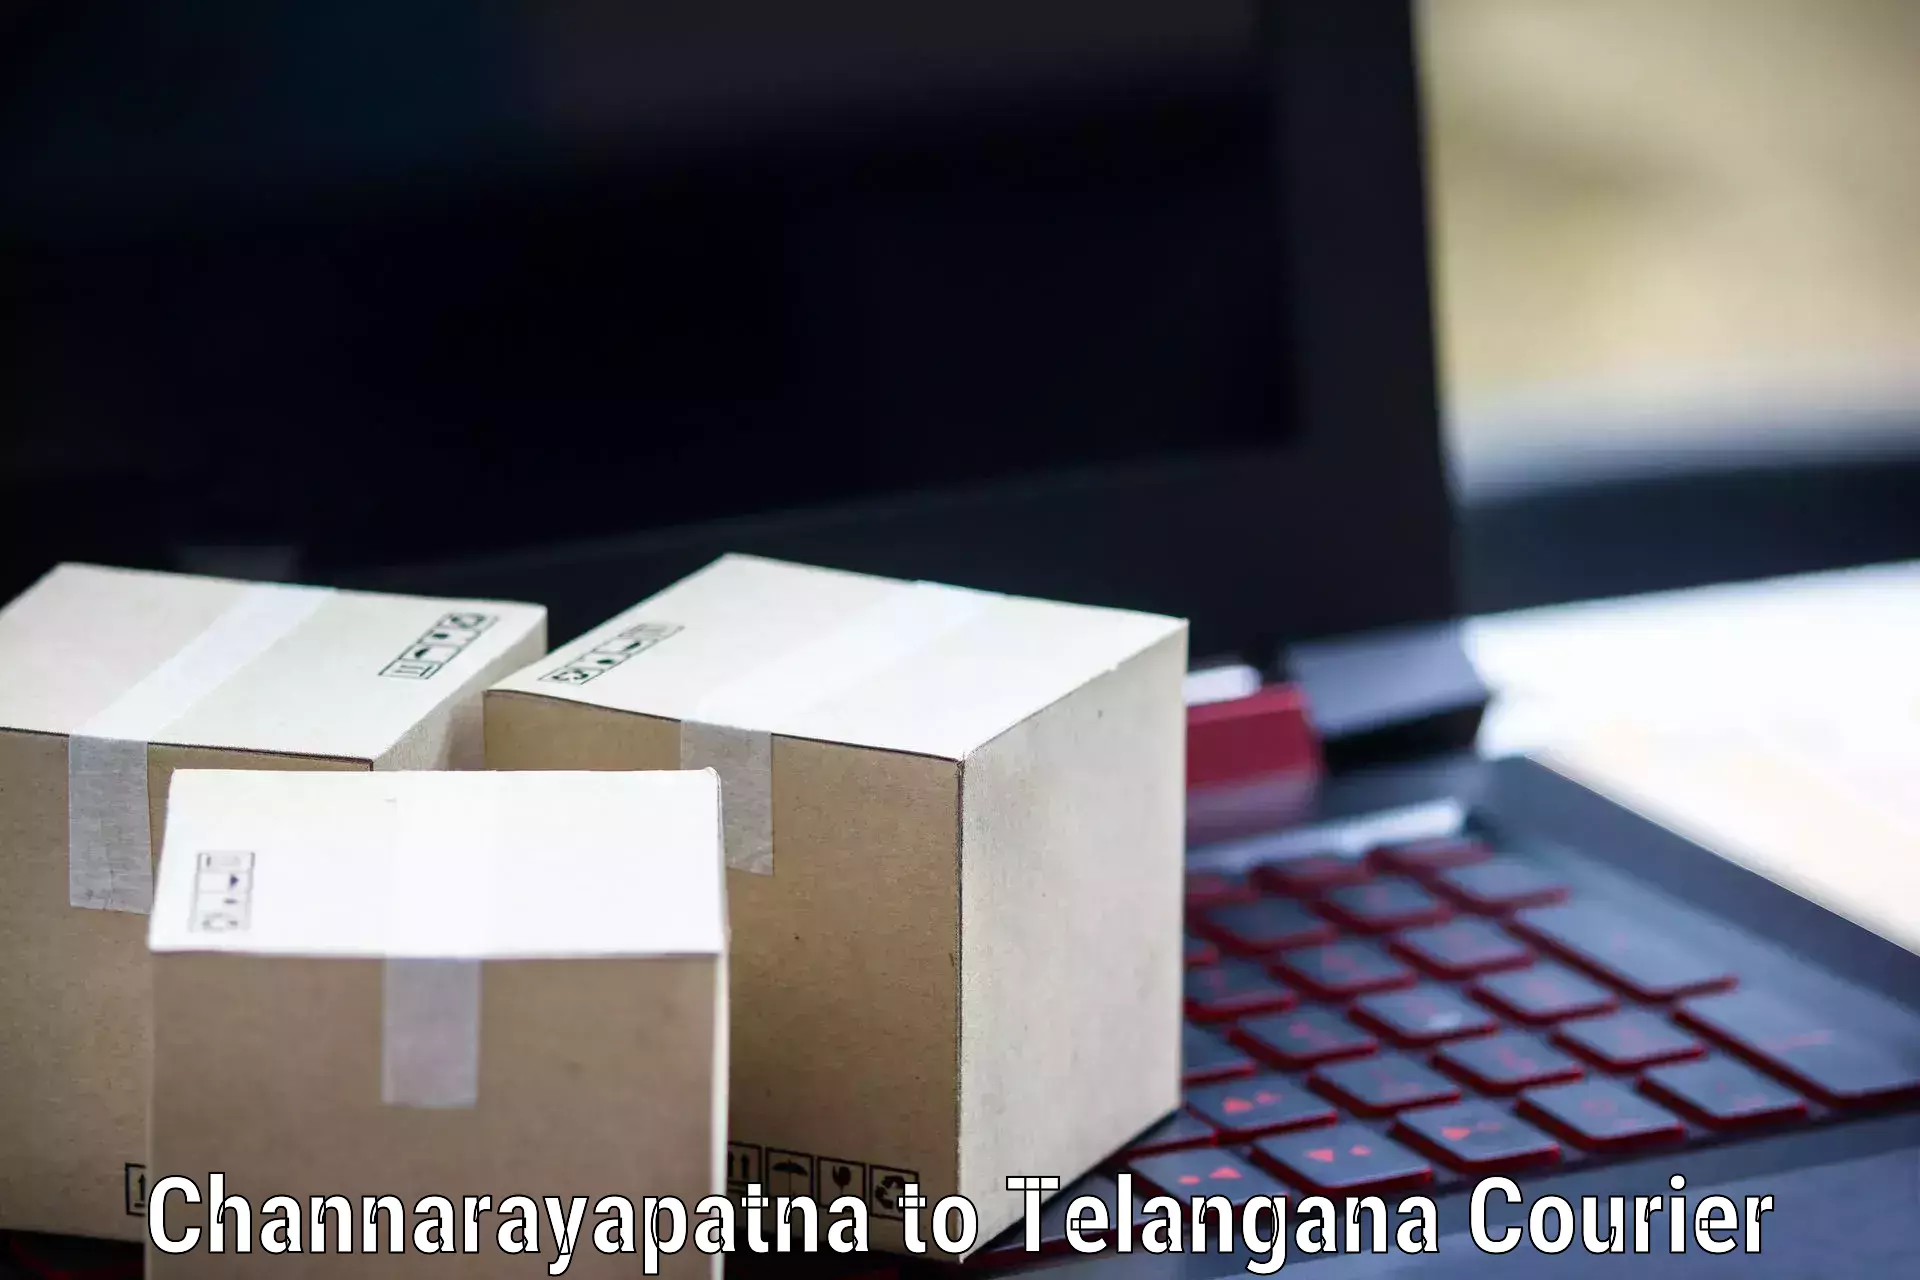 Advanced shipping technology Channarayapatna to Alair